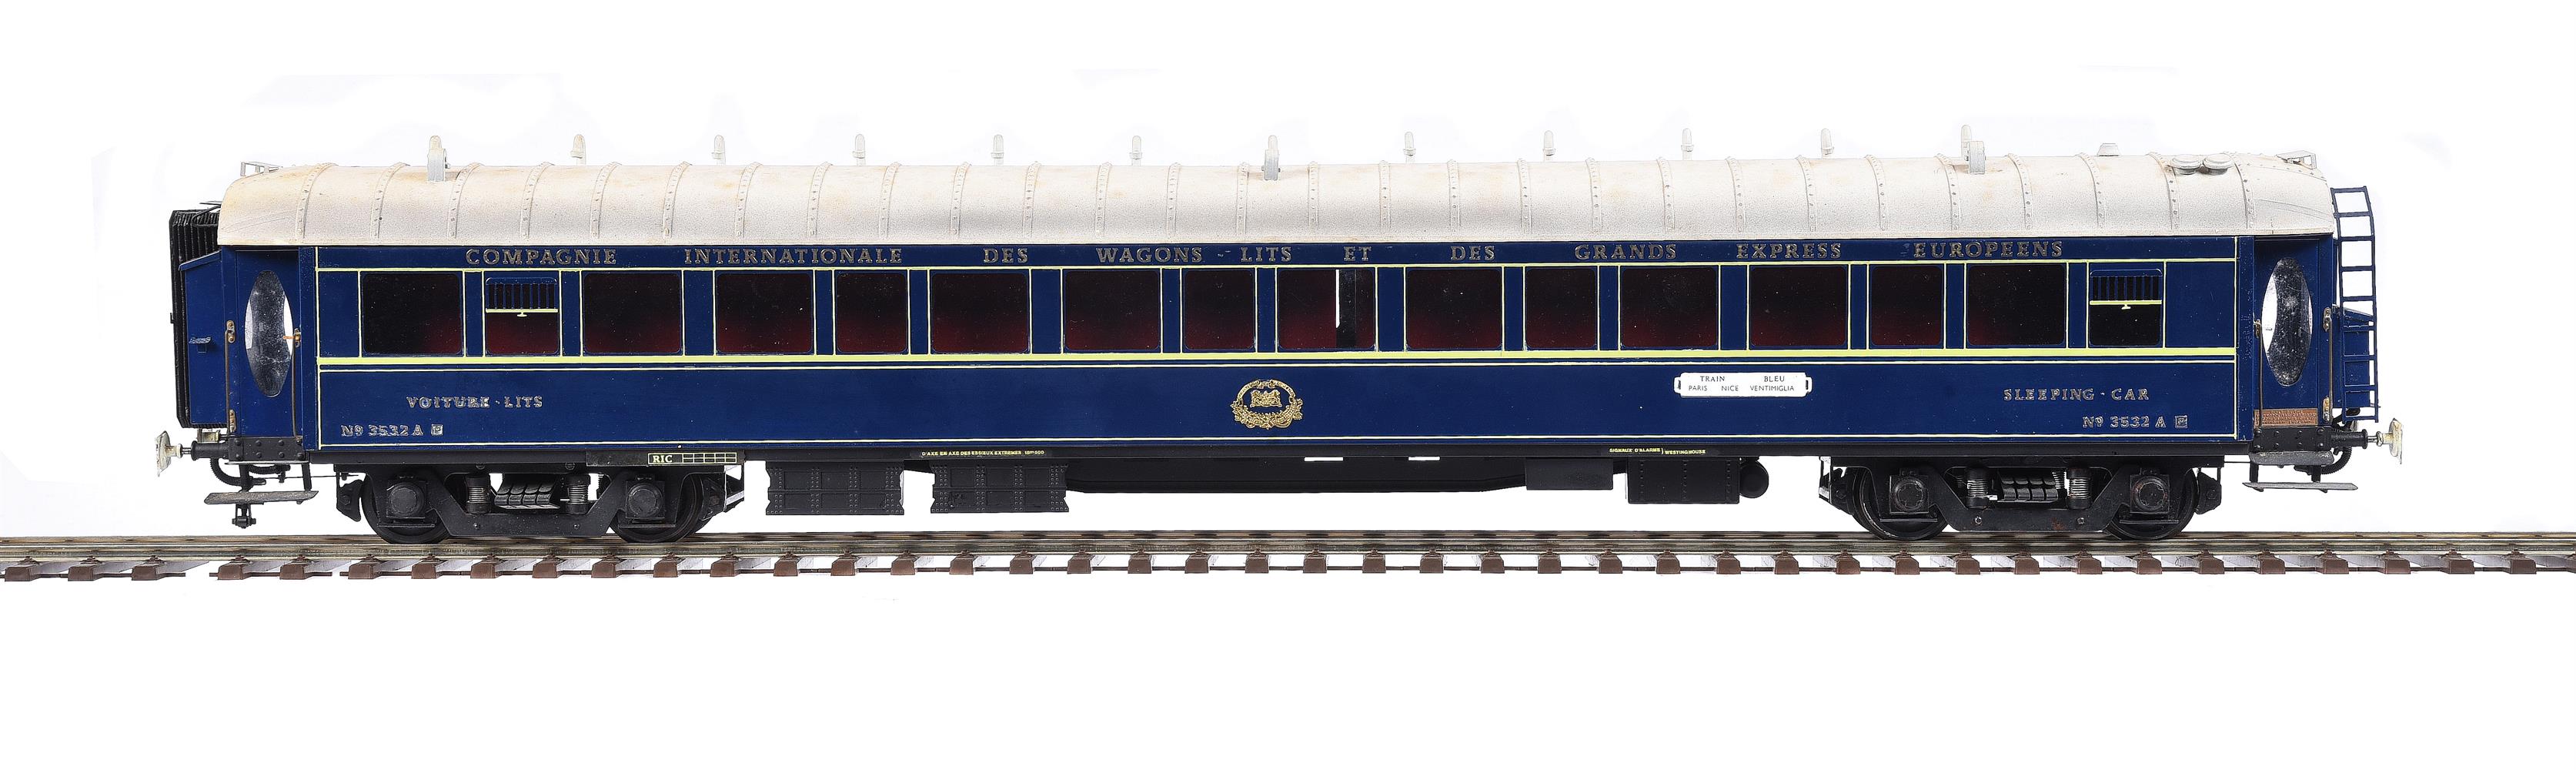 A fine gauge 1 model of an LX CIWL railway sleeping car - Image 2 of 3